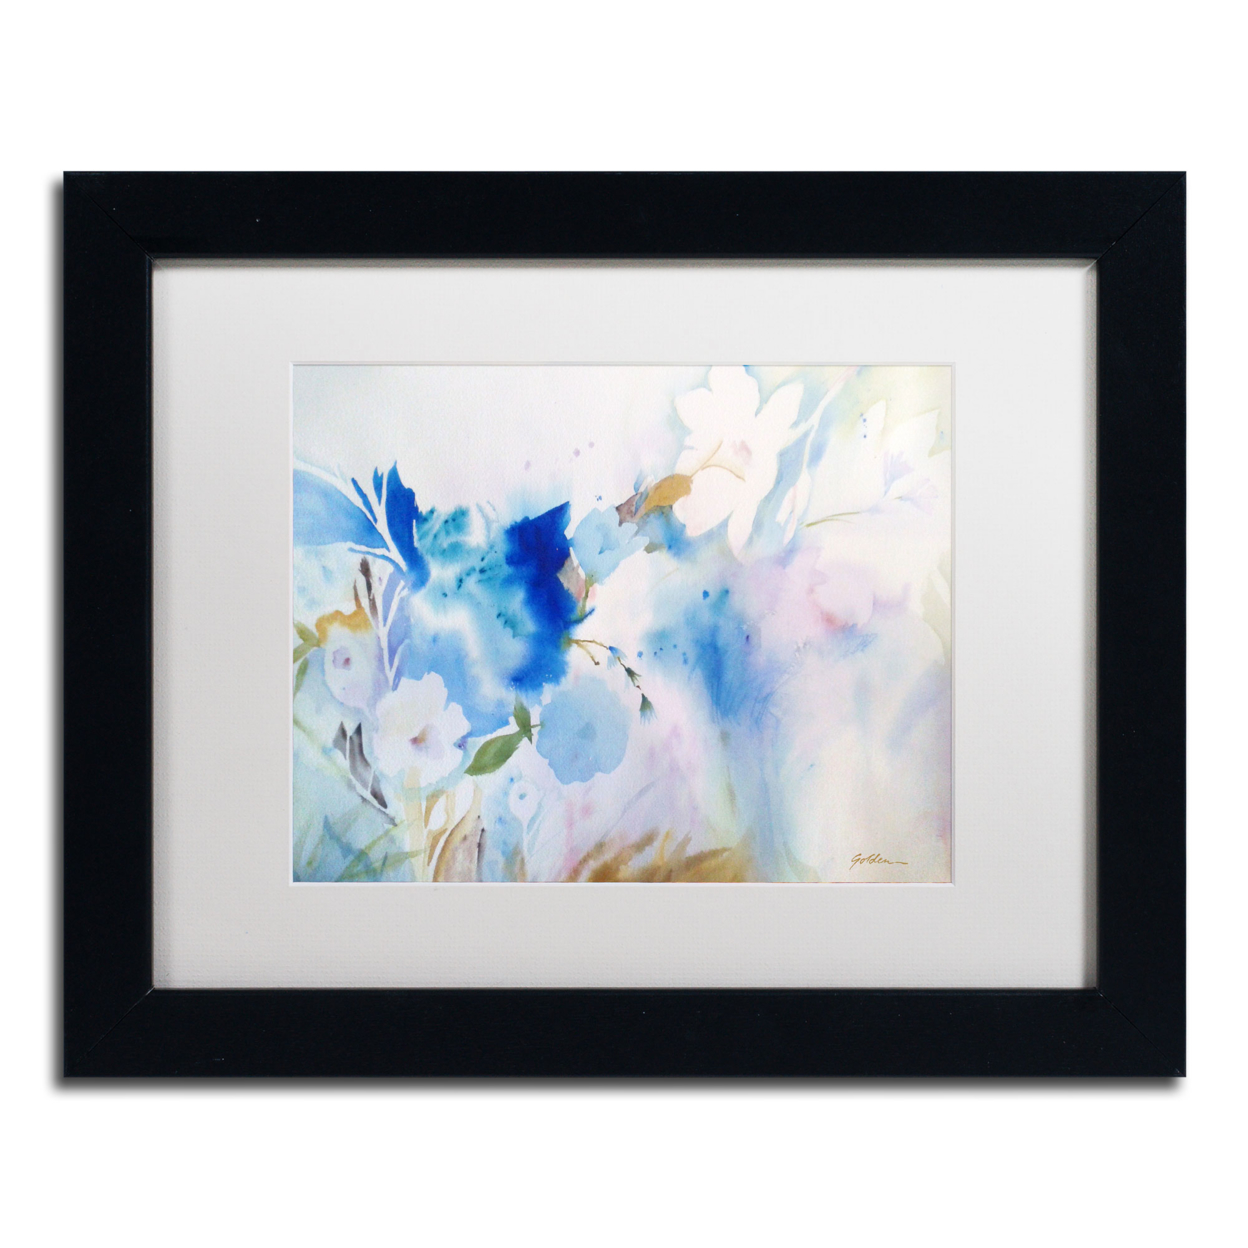 Sheila Golden 'Blue Whispers' Black Wooden Framed Art 18 X 22 Inches